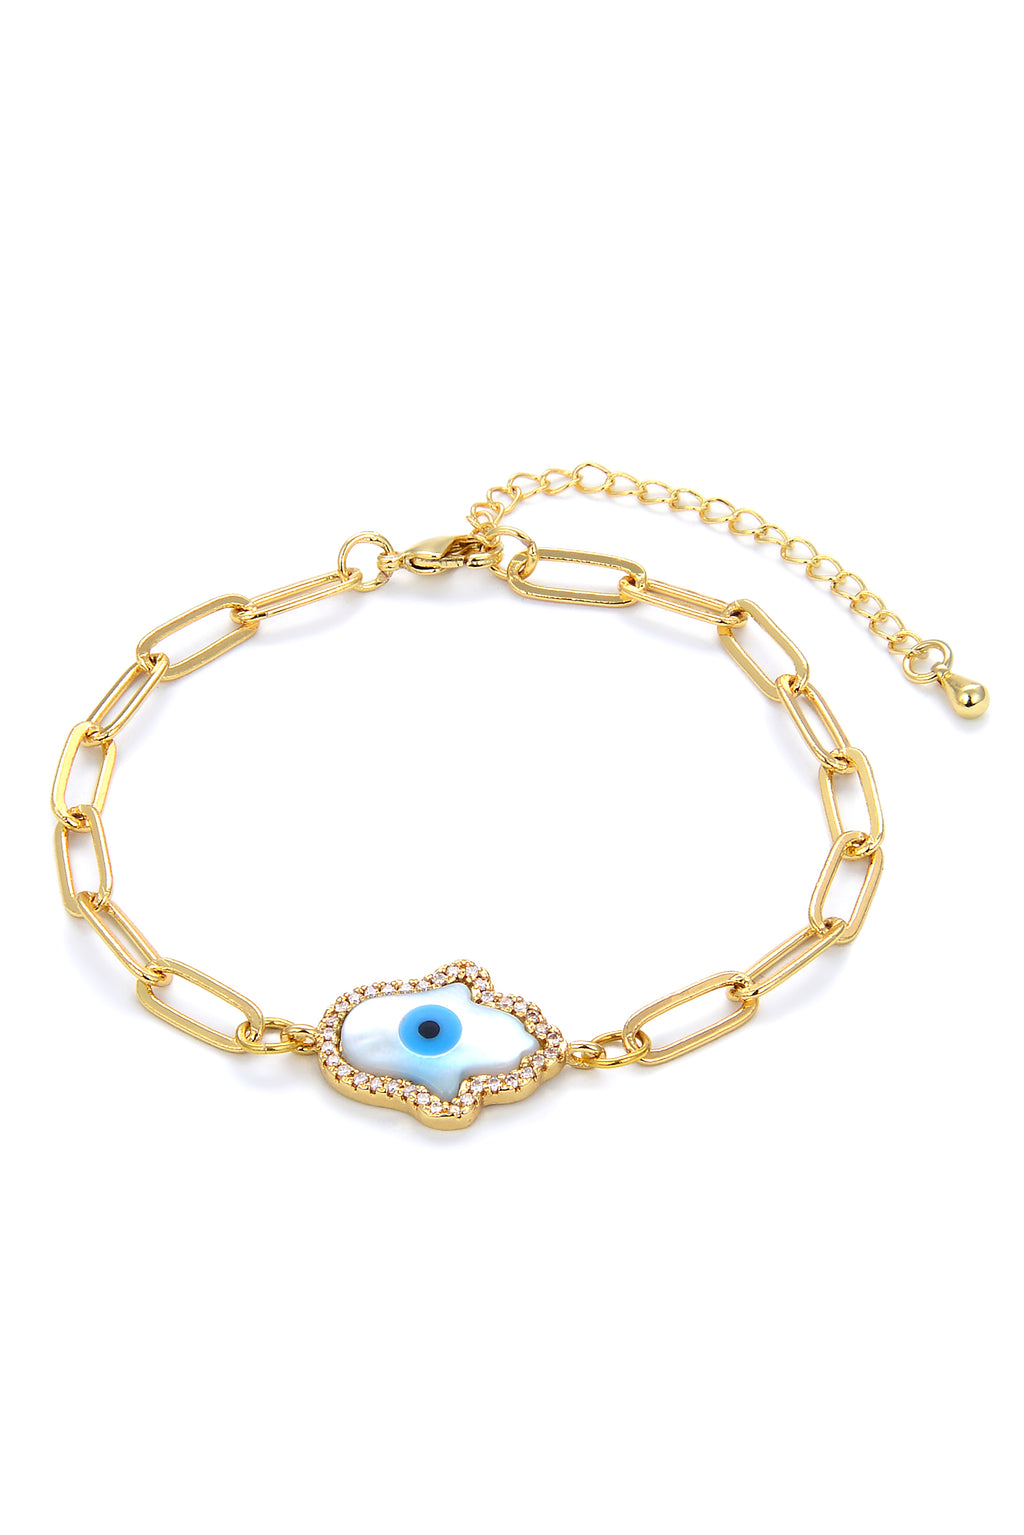 Chain charm bracelet with hamsa hand pendant and blue evil eye motif.